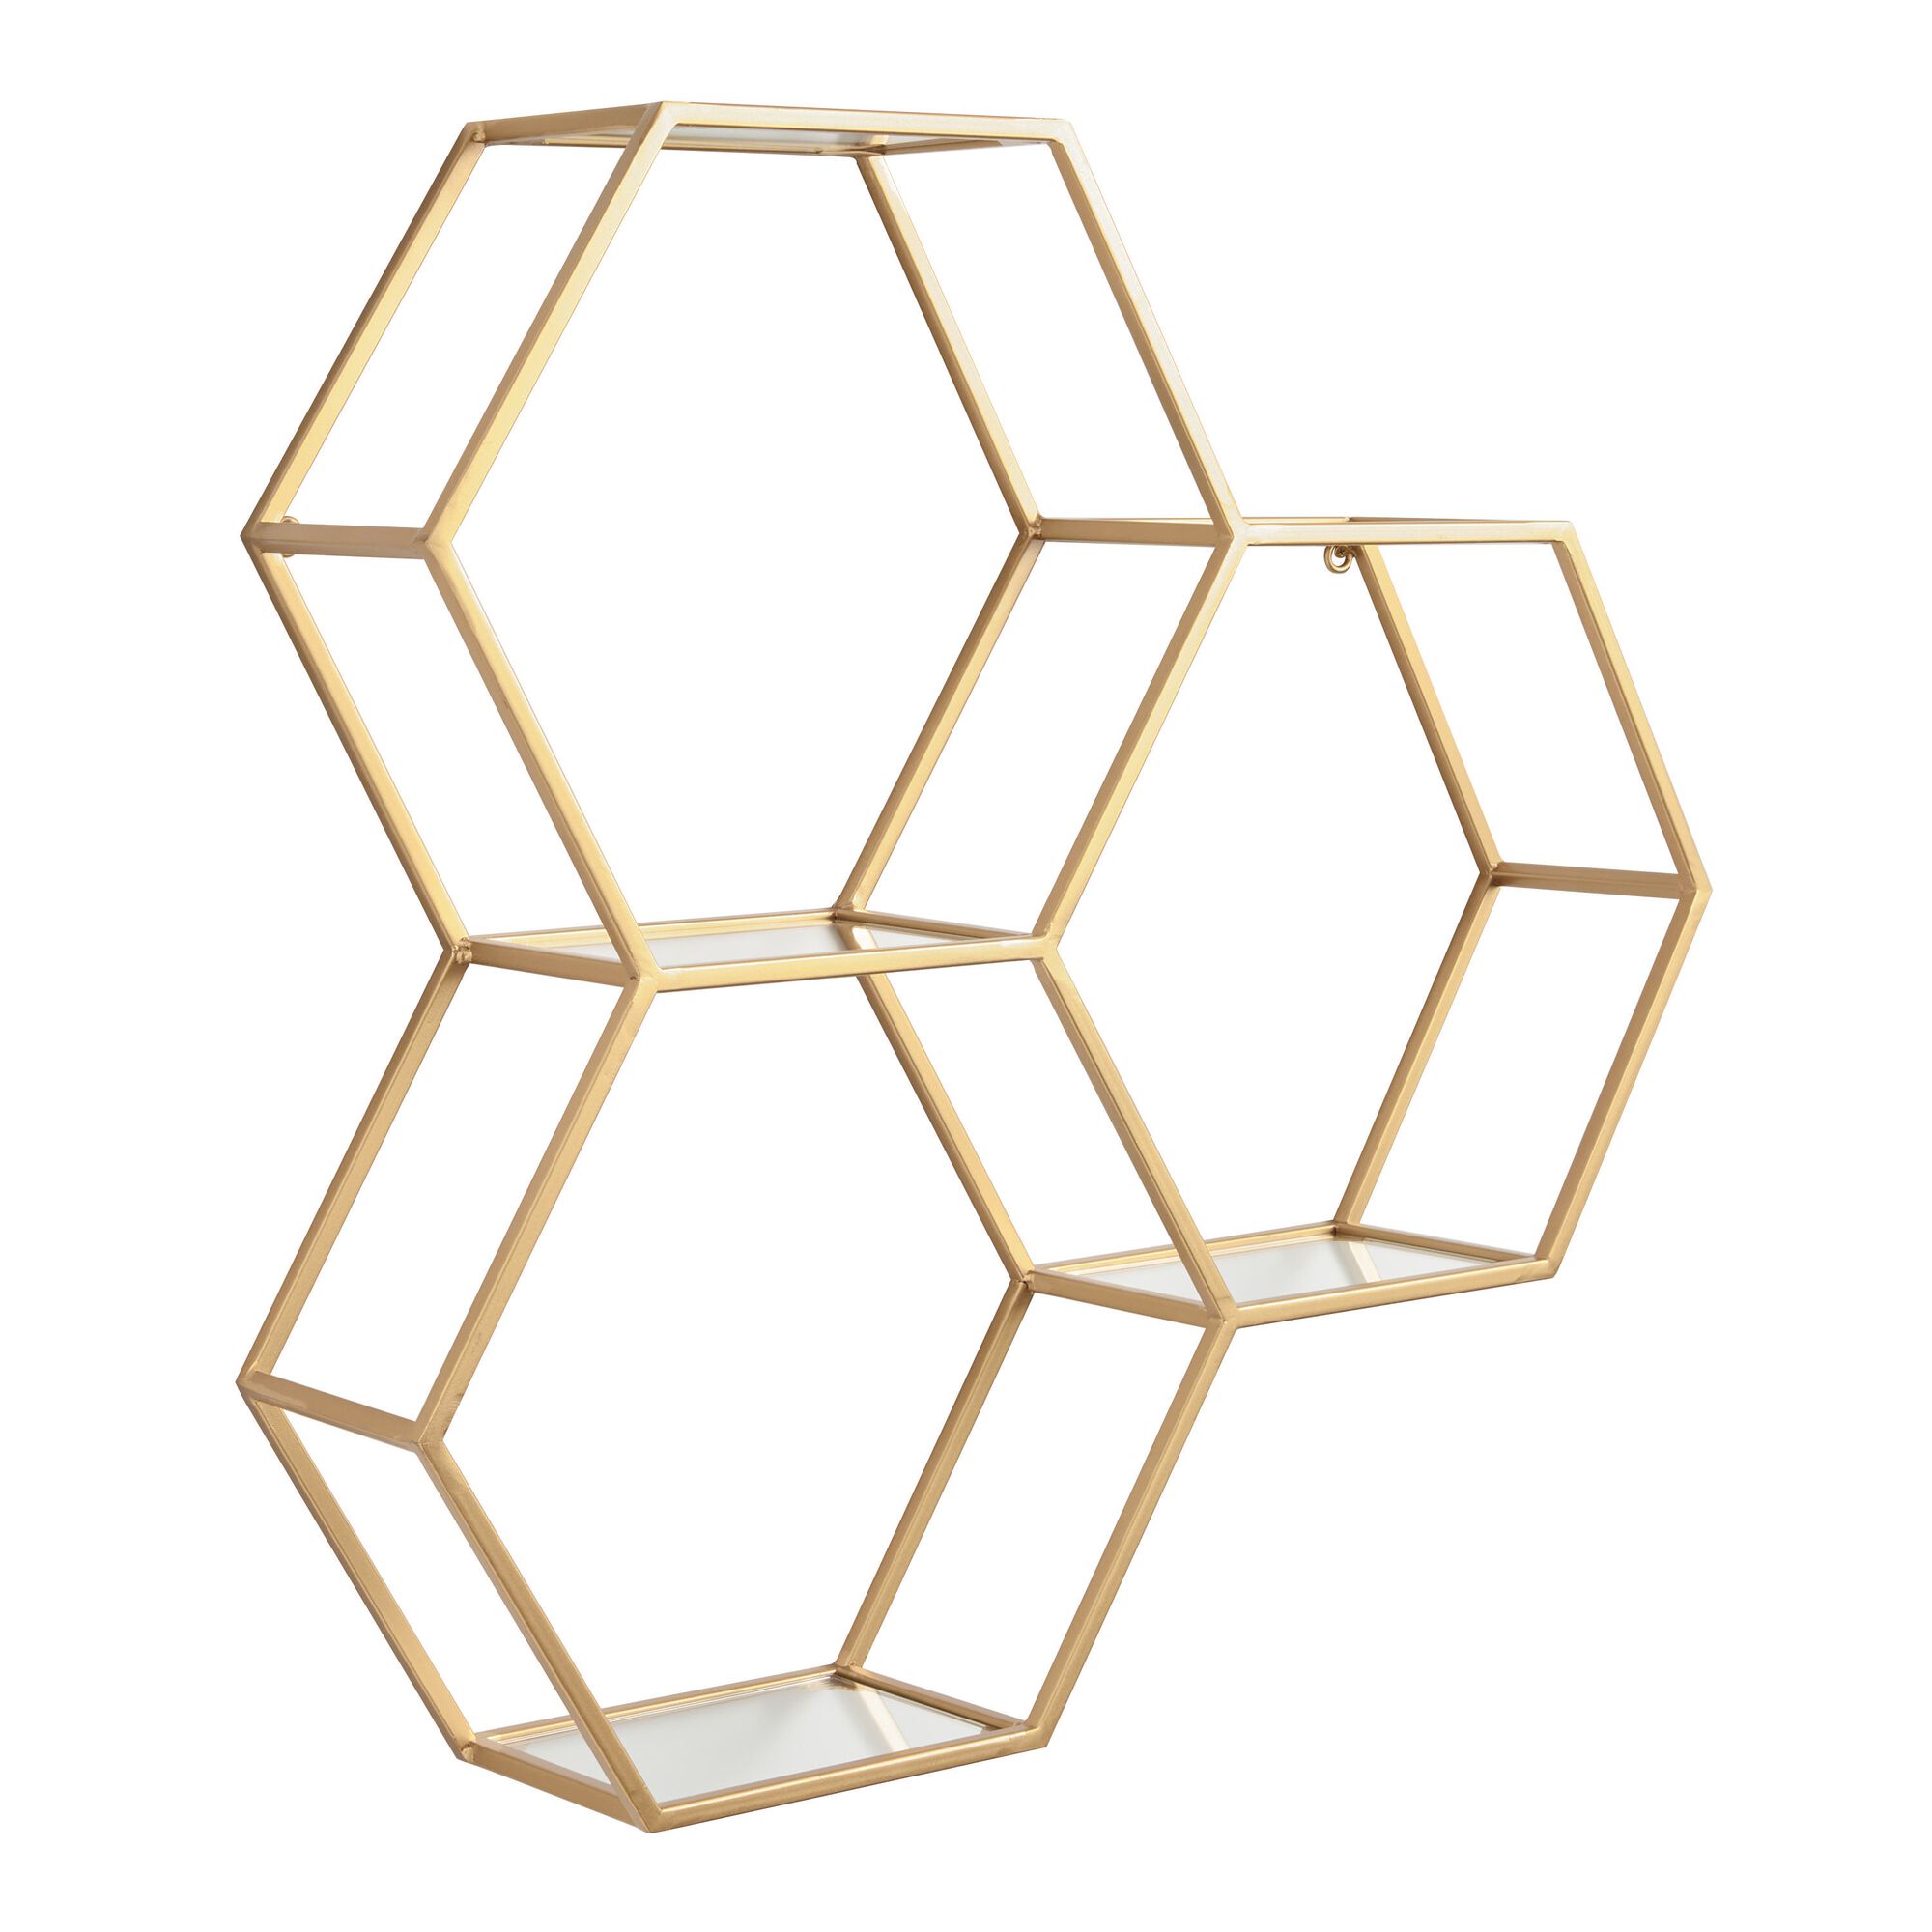 Gold and Glass Honeycomb Wall Shelf - World Market